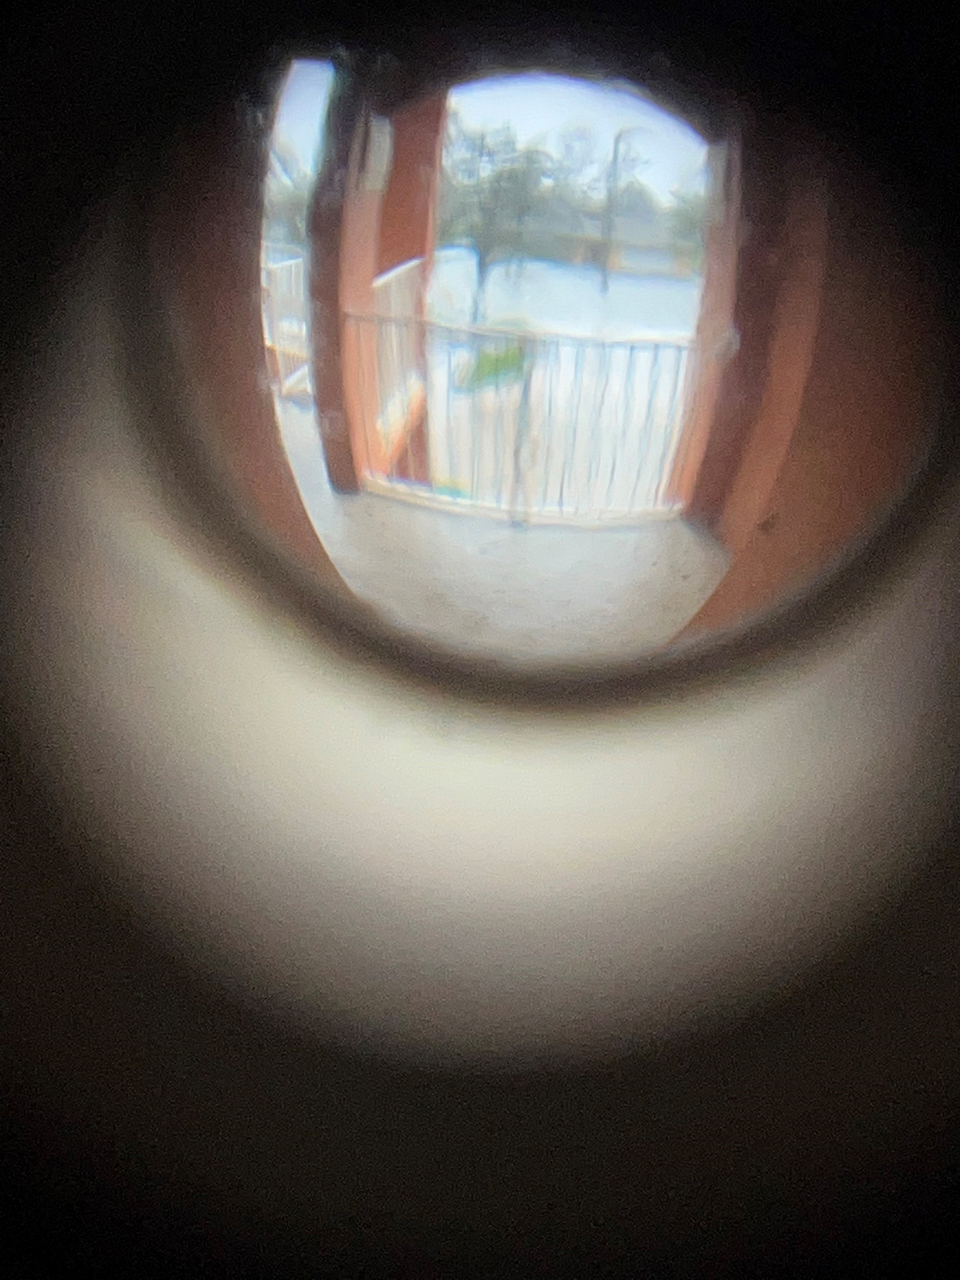 View of outside through a peephole.